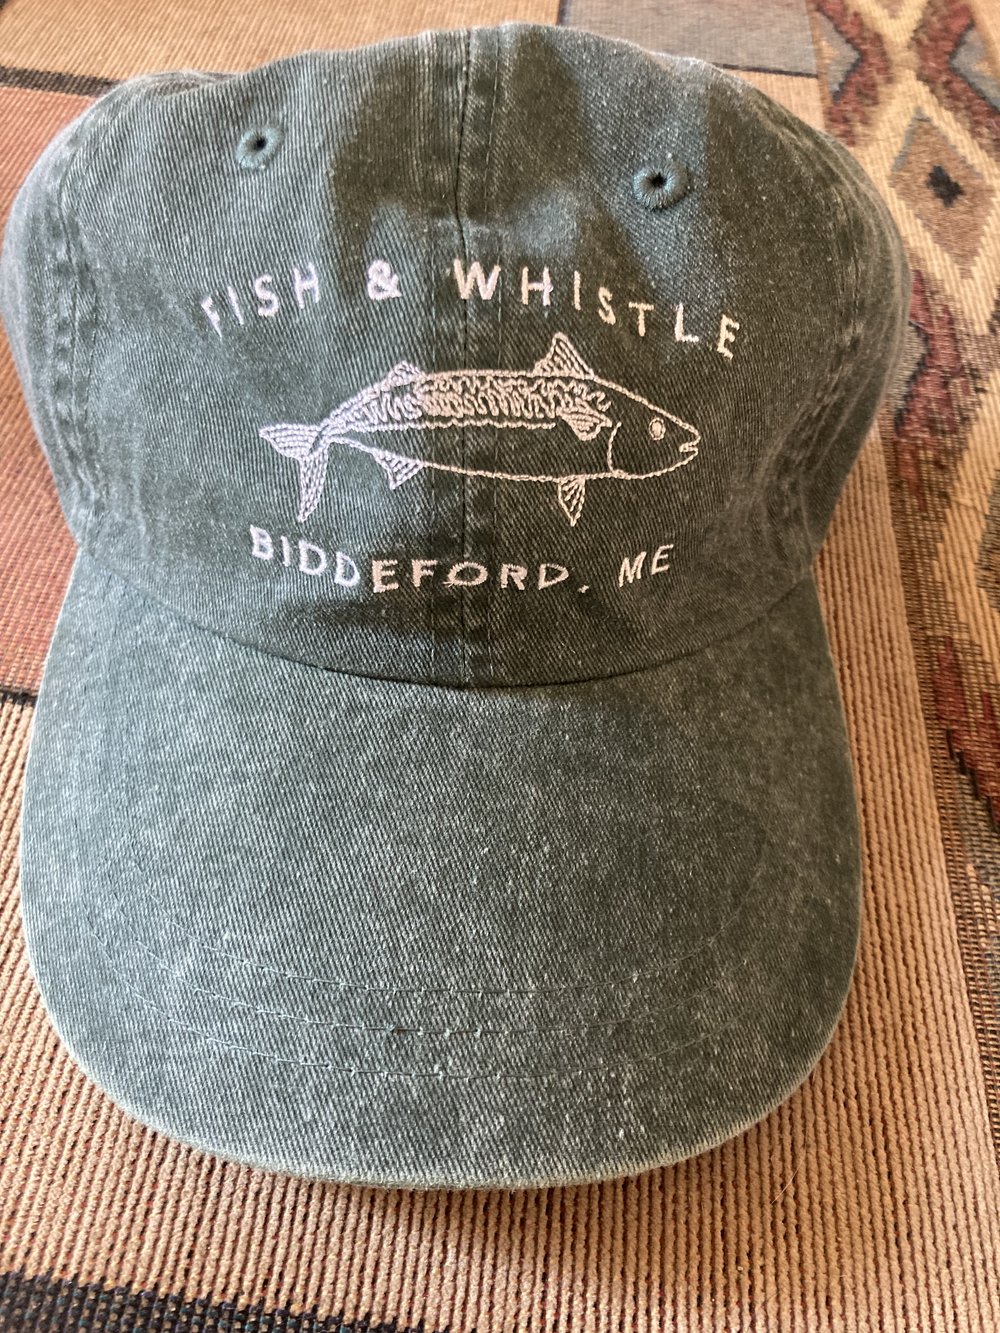 Mackerel Hat — Fish & Whistle